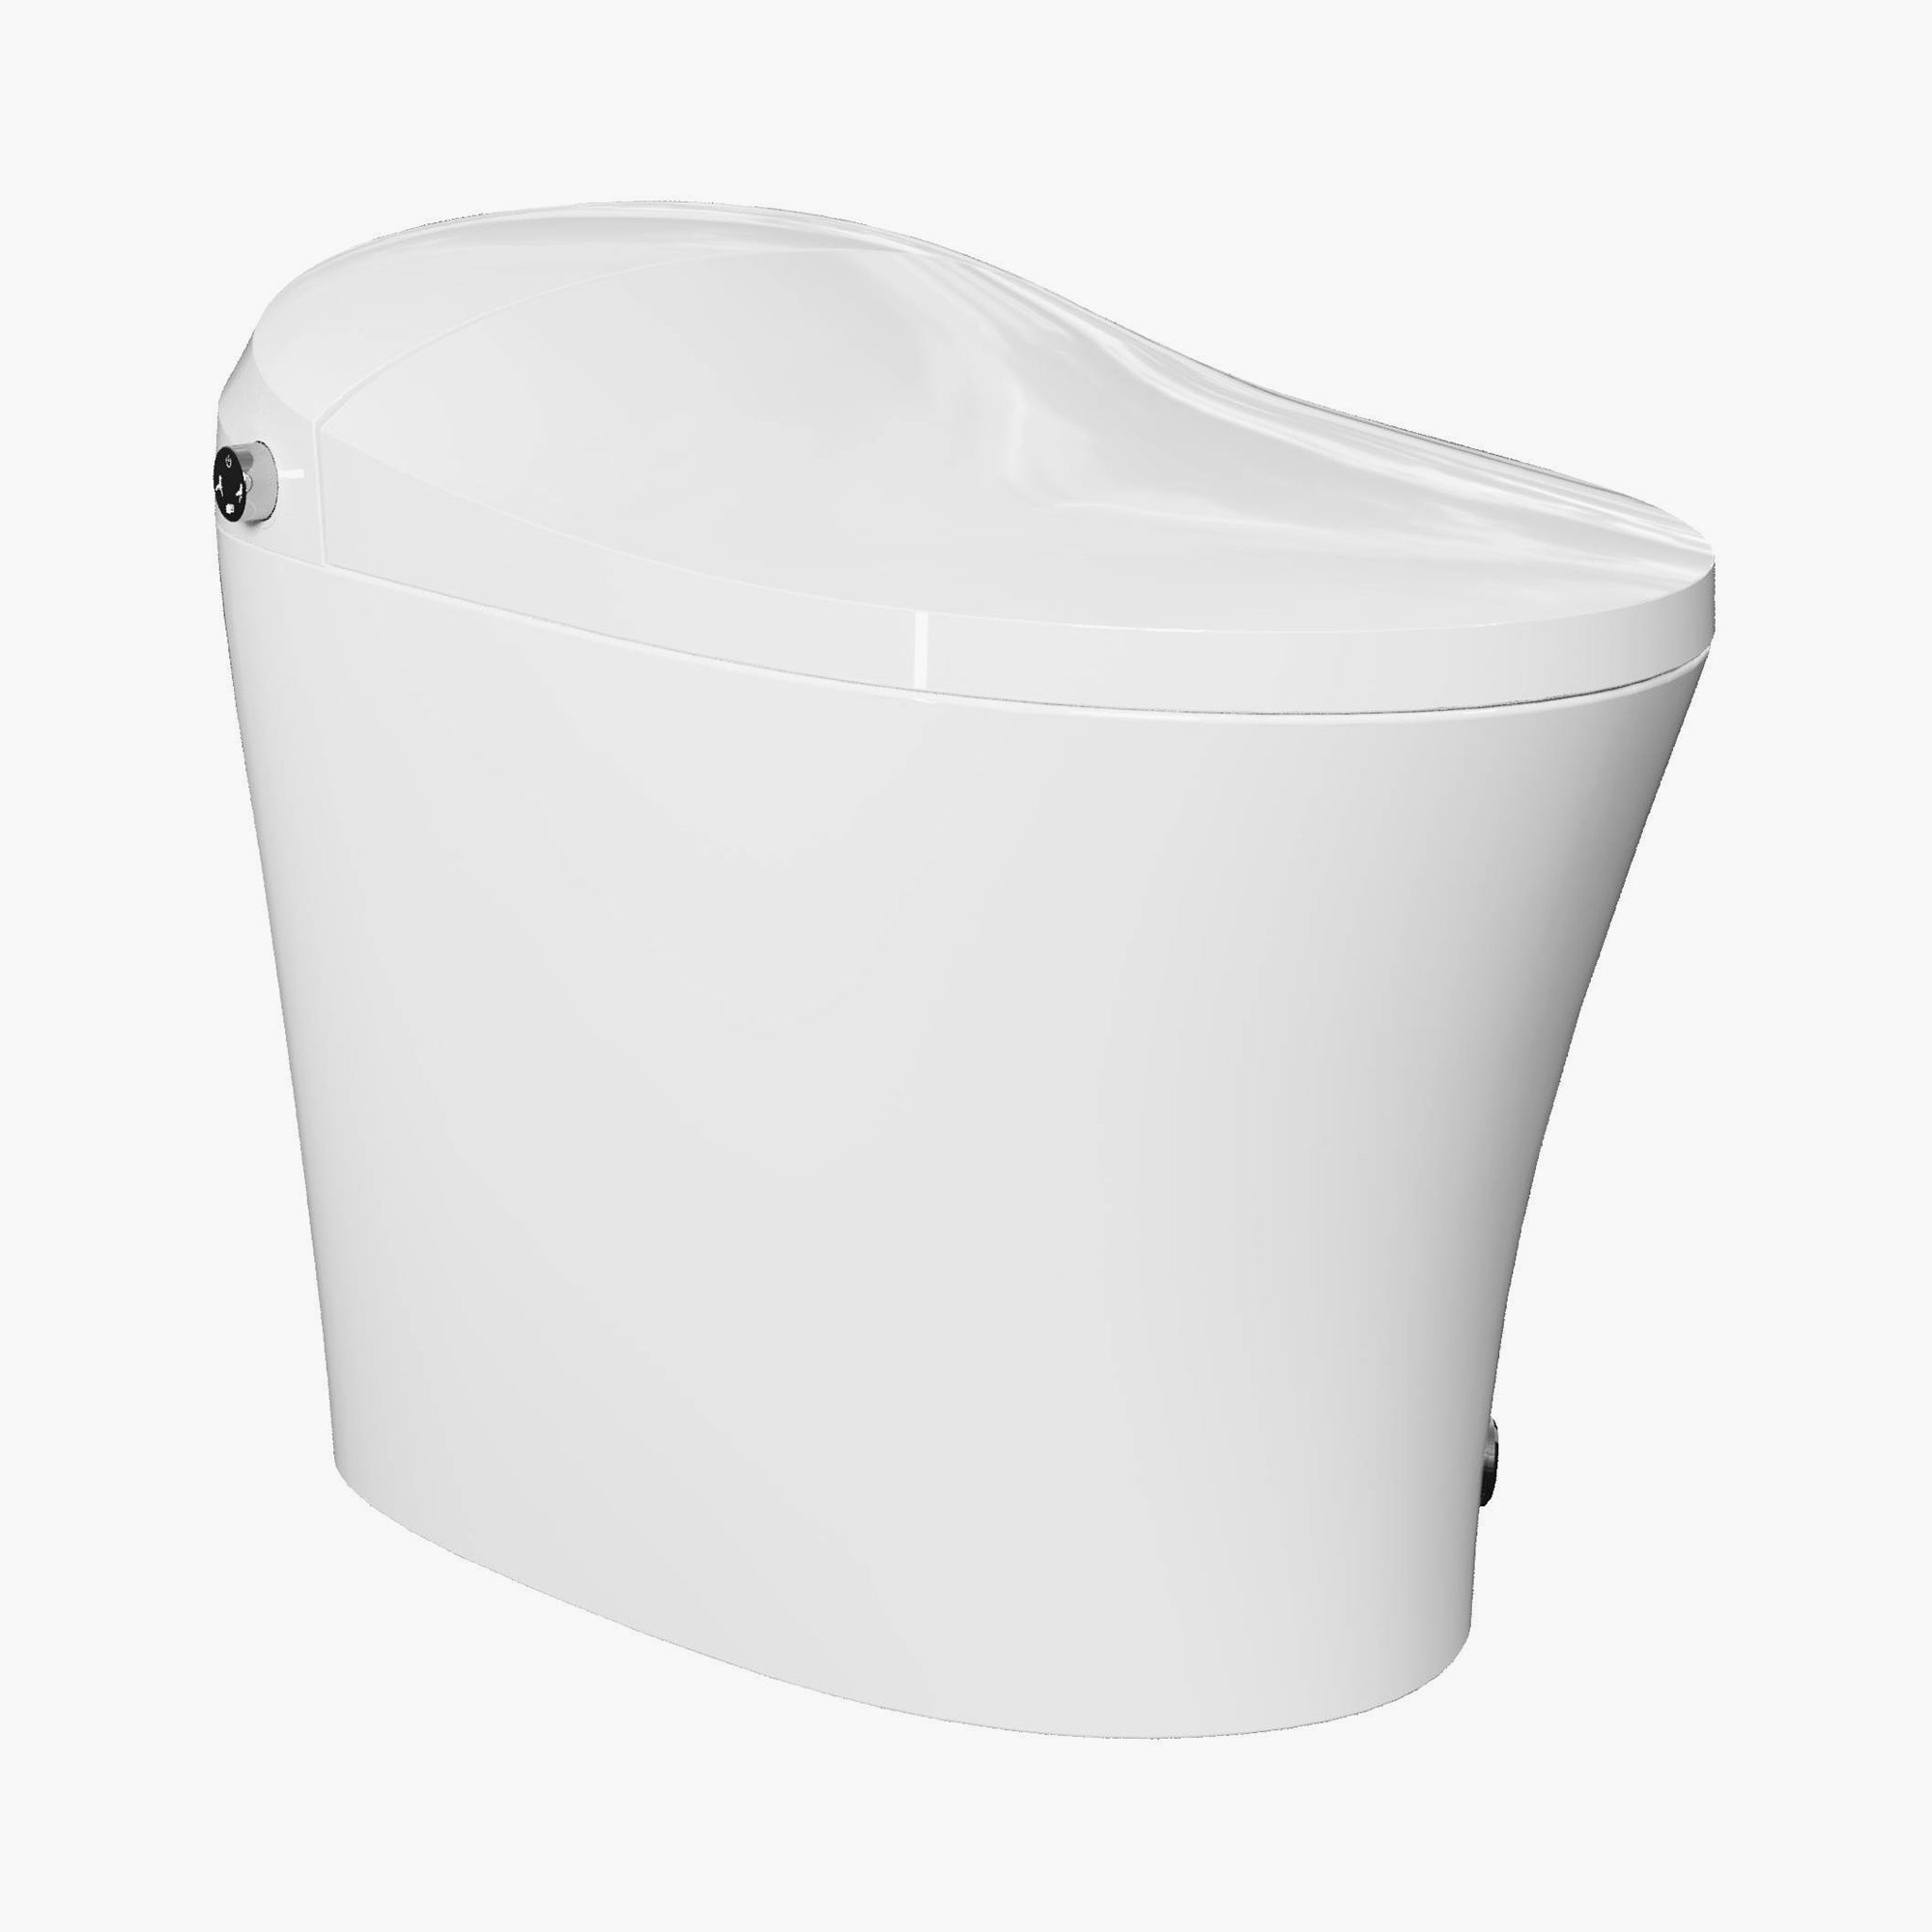 HOROW Smart Toilet With Heated Bidet Dual Flush Toilet Model T16